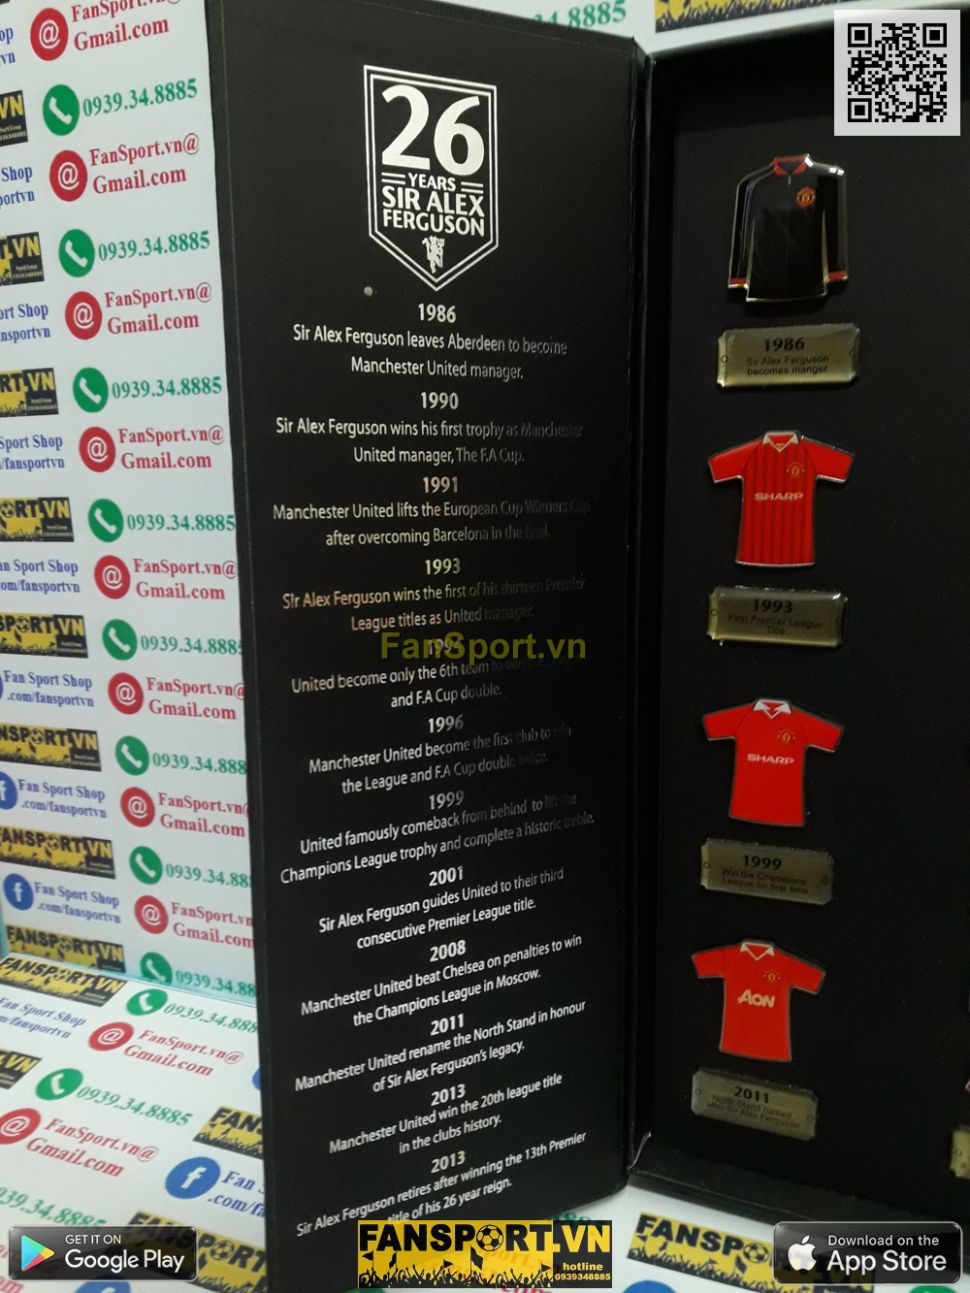 Badge 26 years Sir Alex Ferguson Manchester United box set shirt 1058